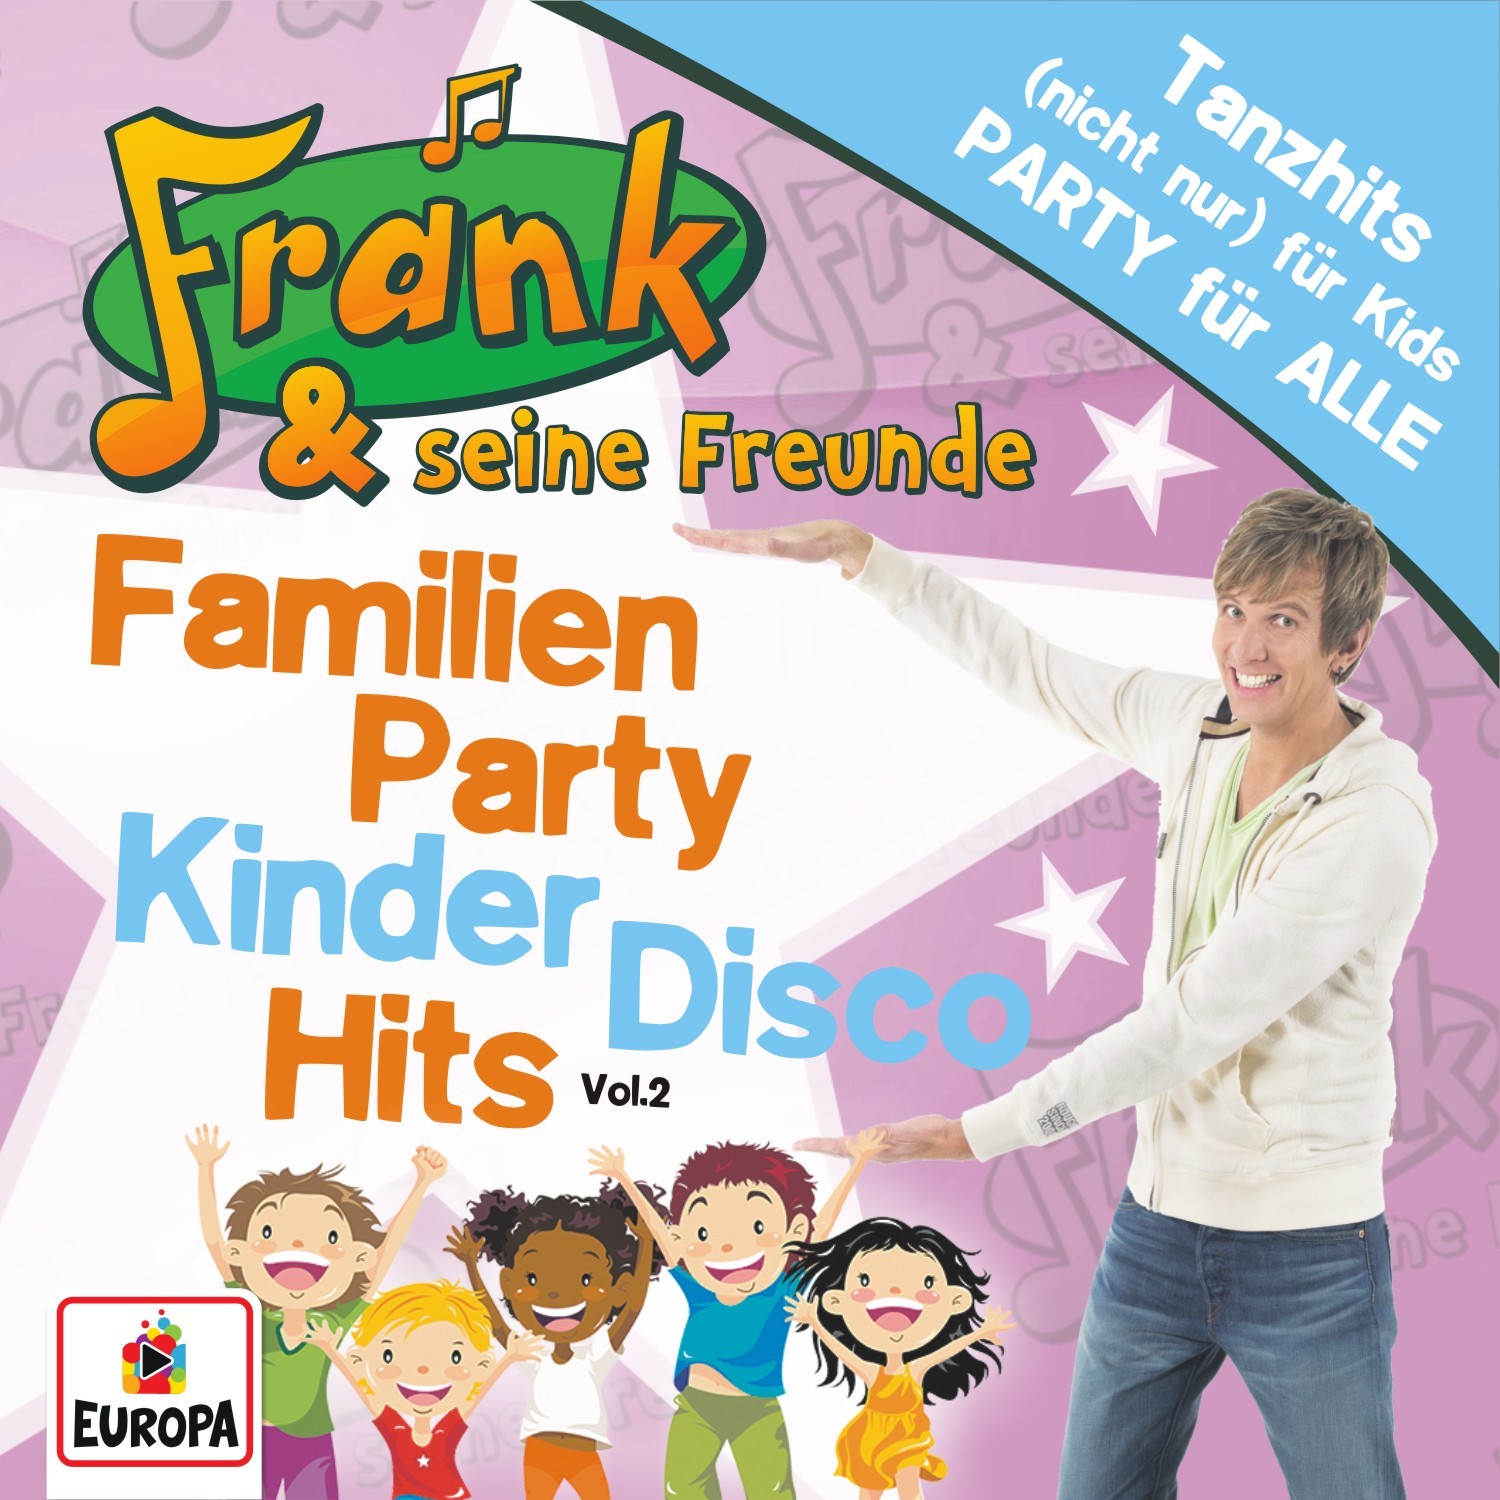 Frank & seine Freunde  - Familien Party Kinder Disco Hits Vol. 2